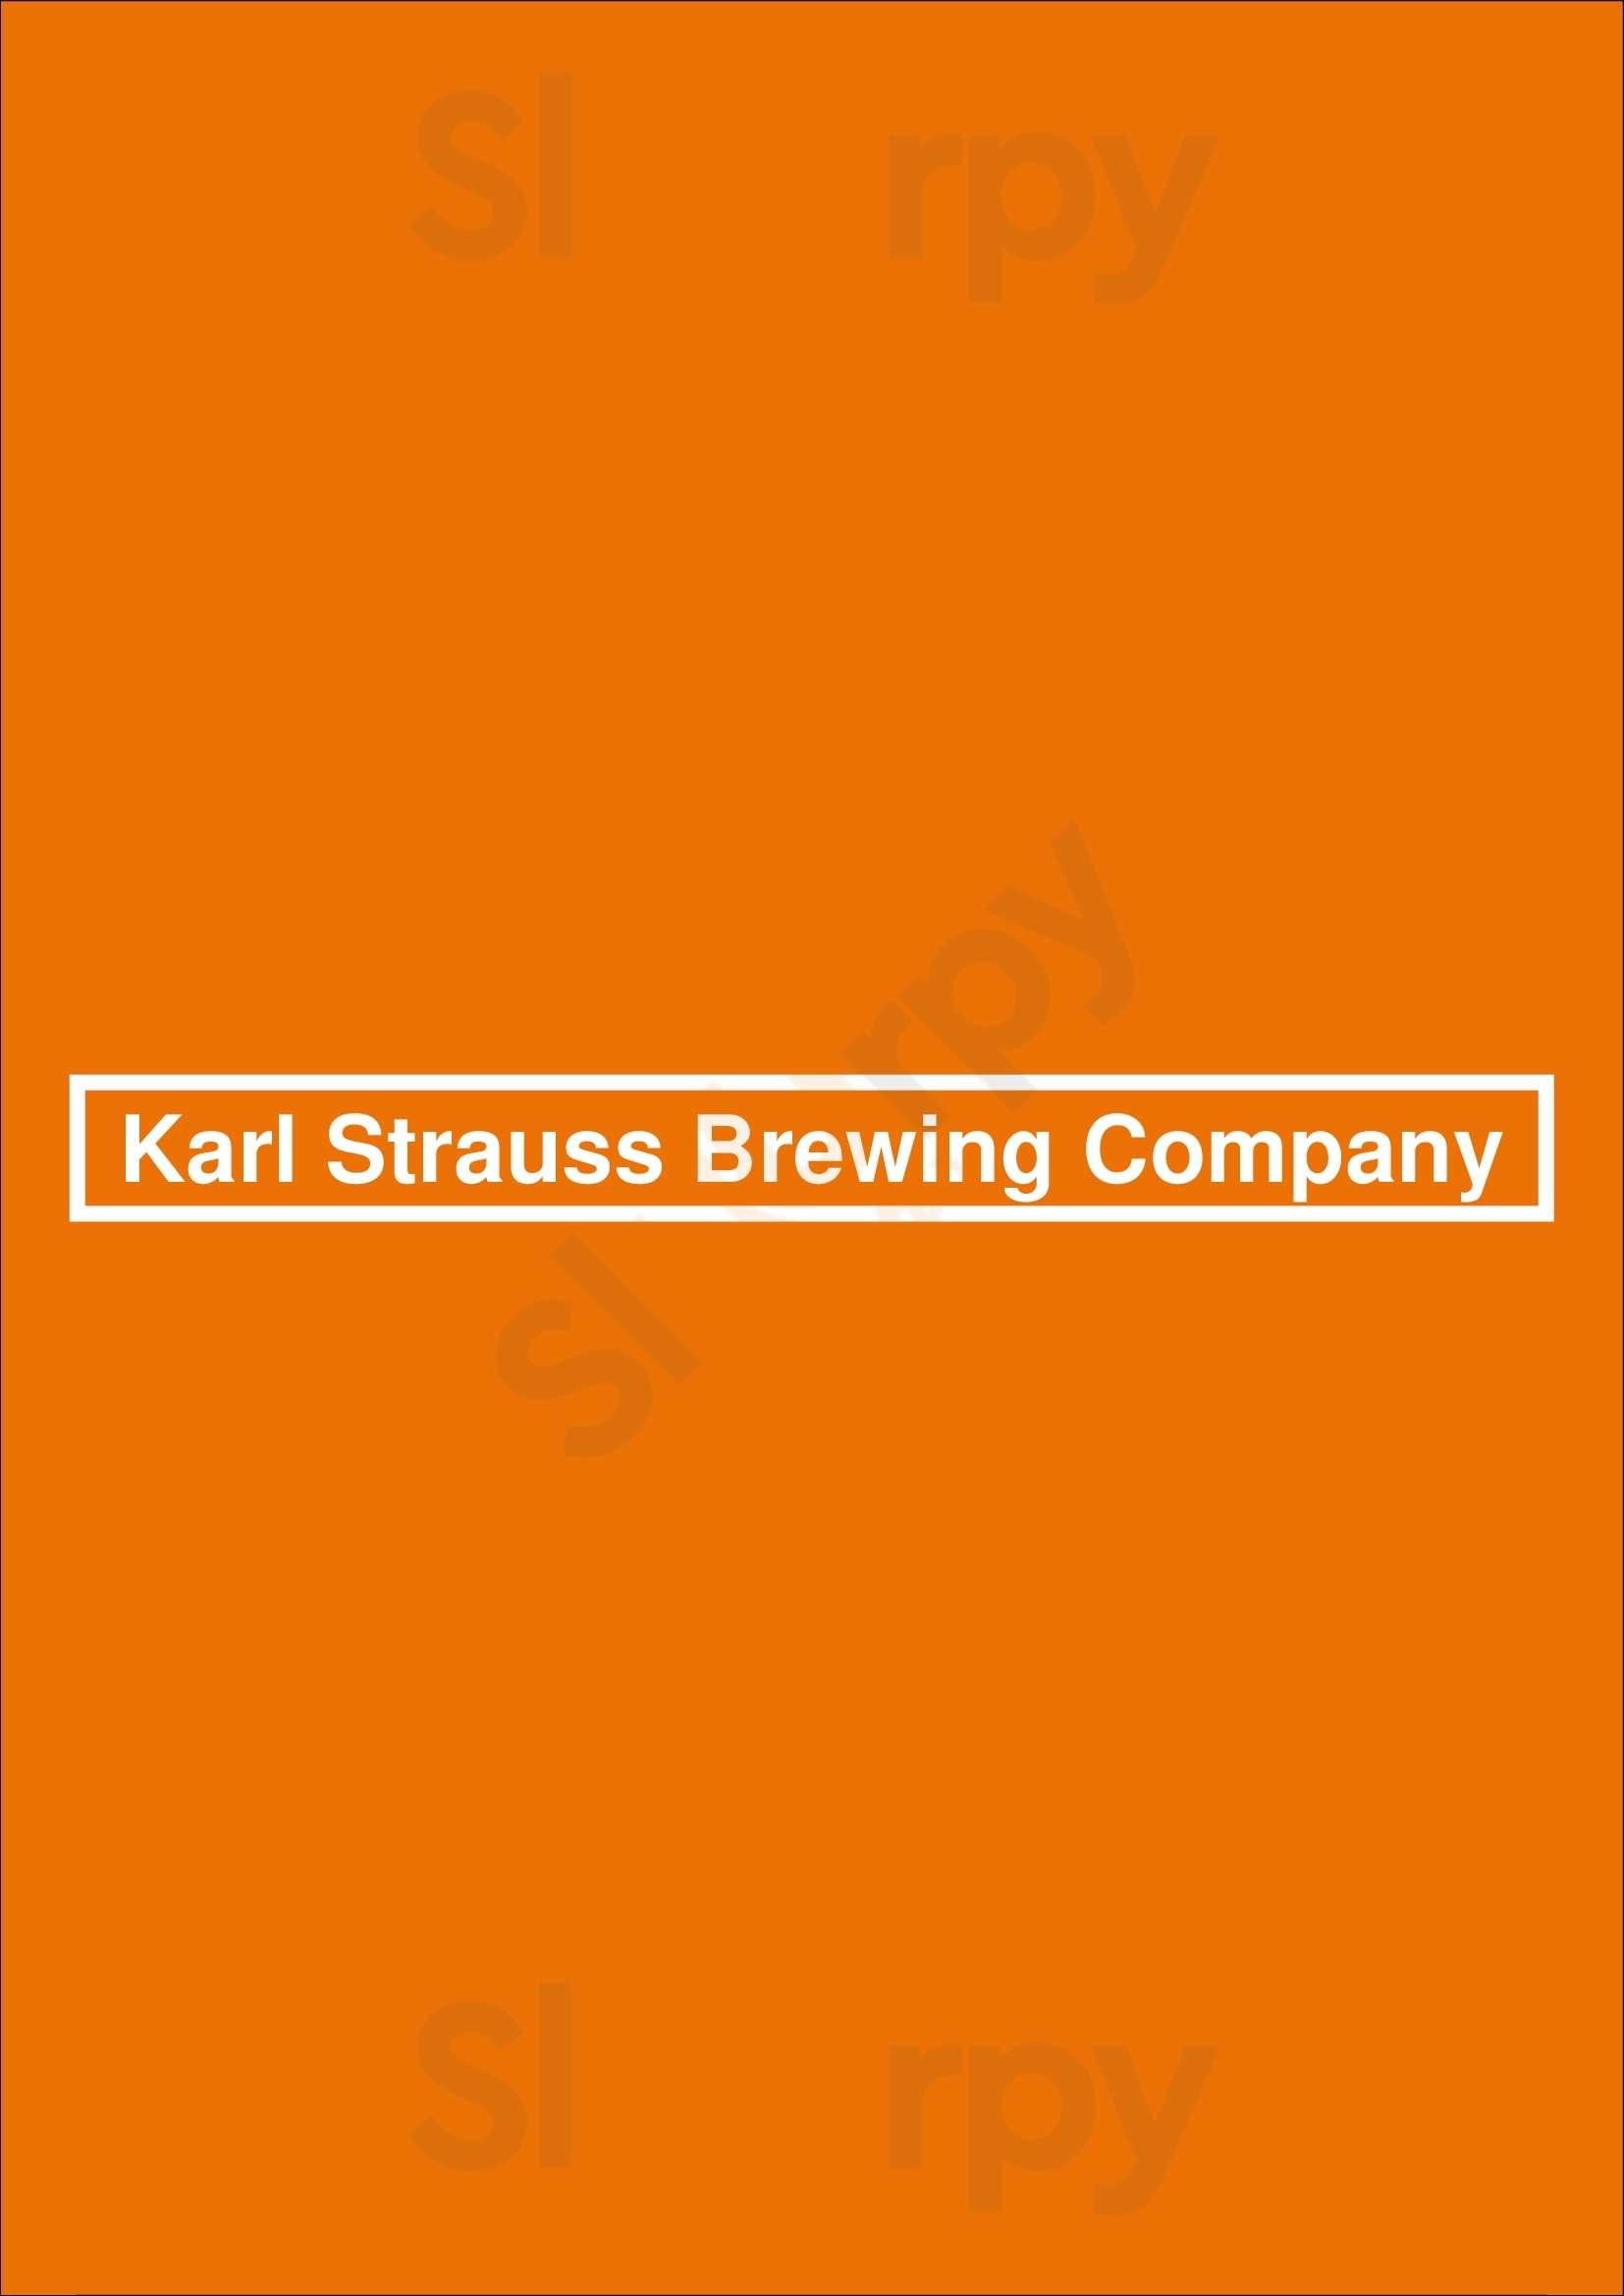 Karl Strauss Brewing Company Los Angeles Menu - 1